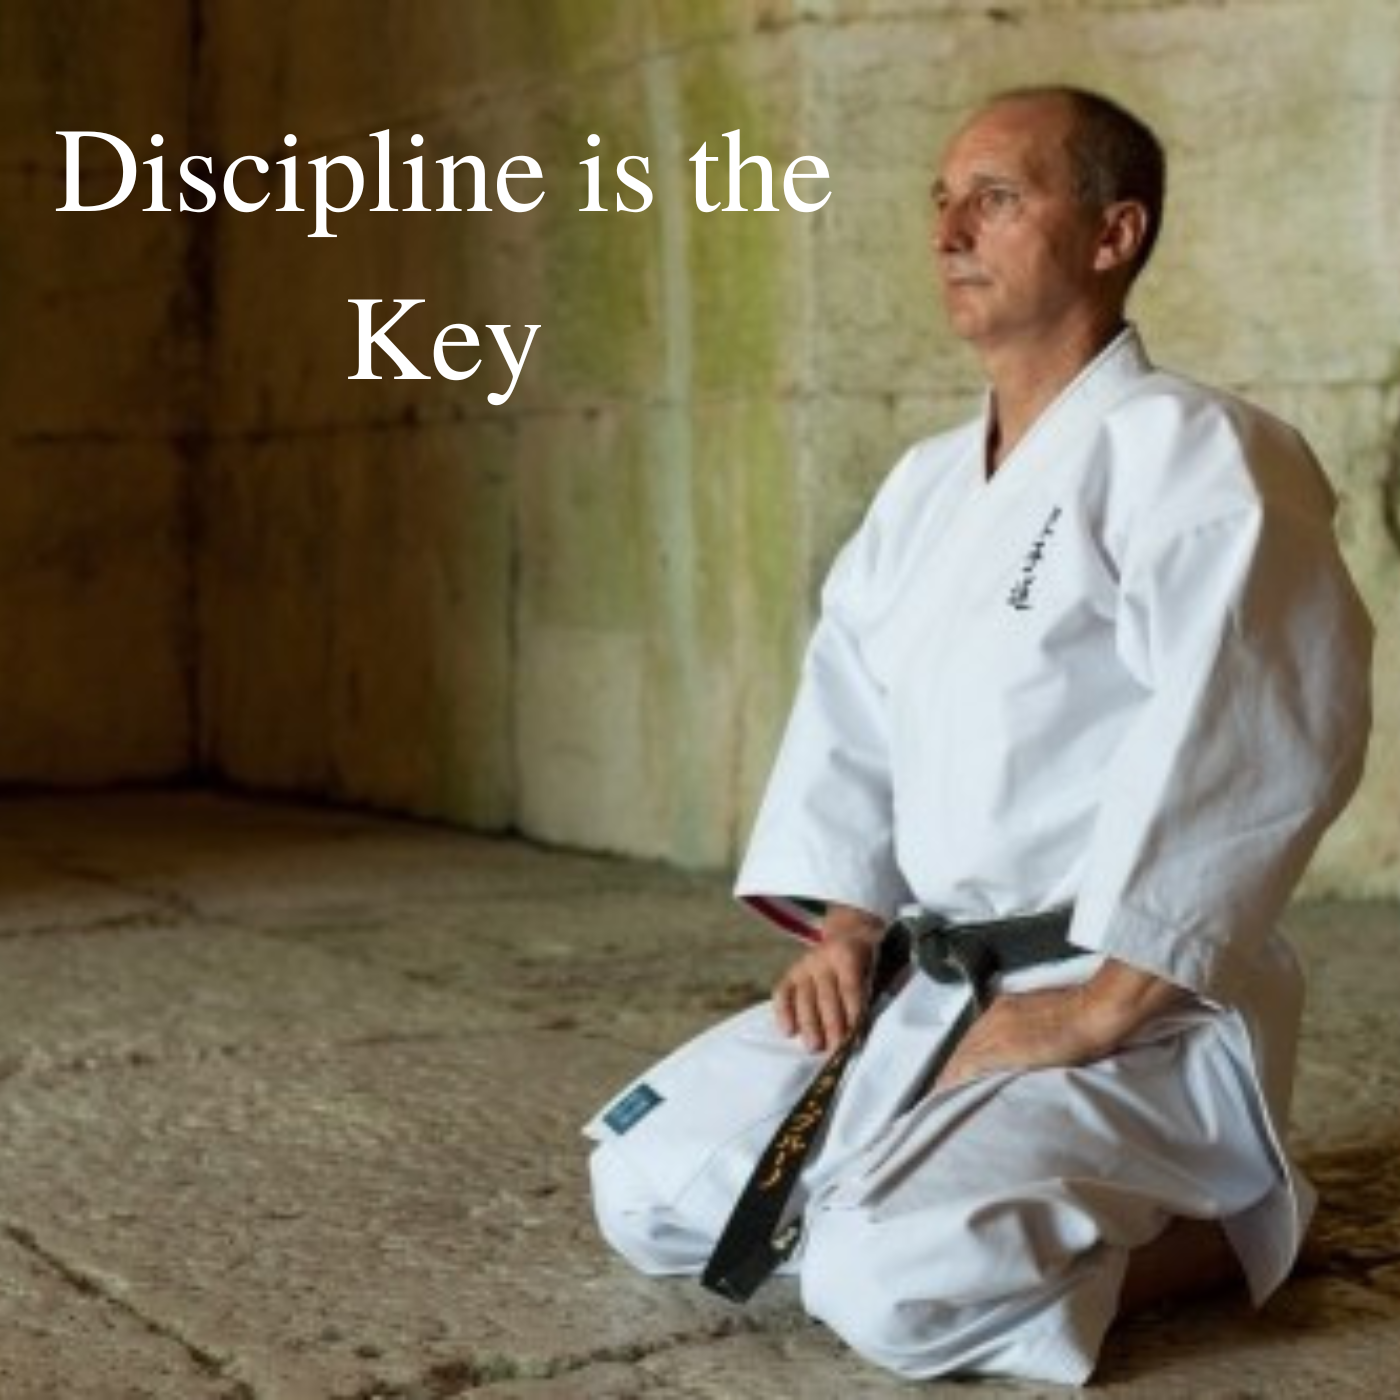 * Discipline is the Key